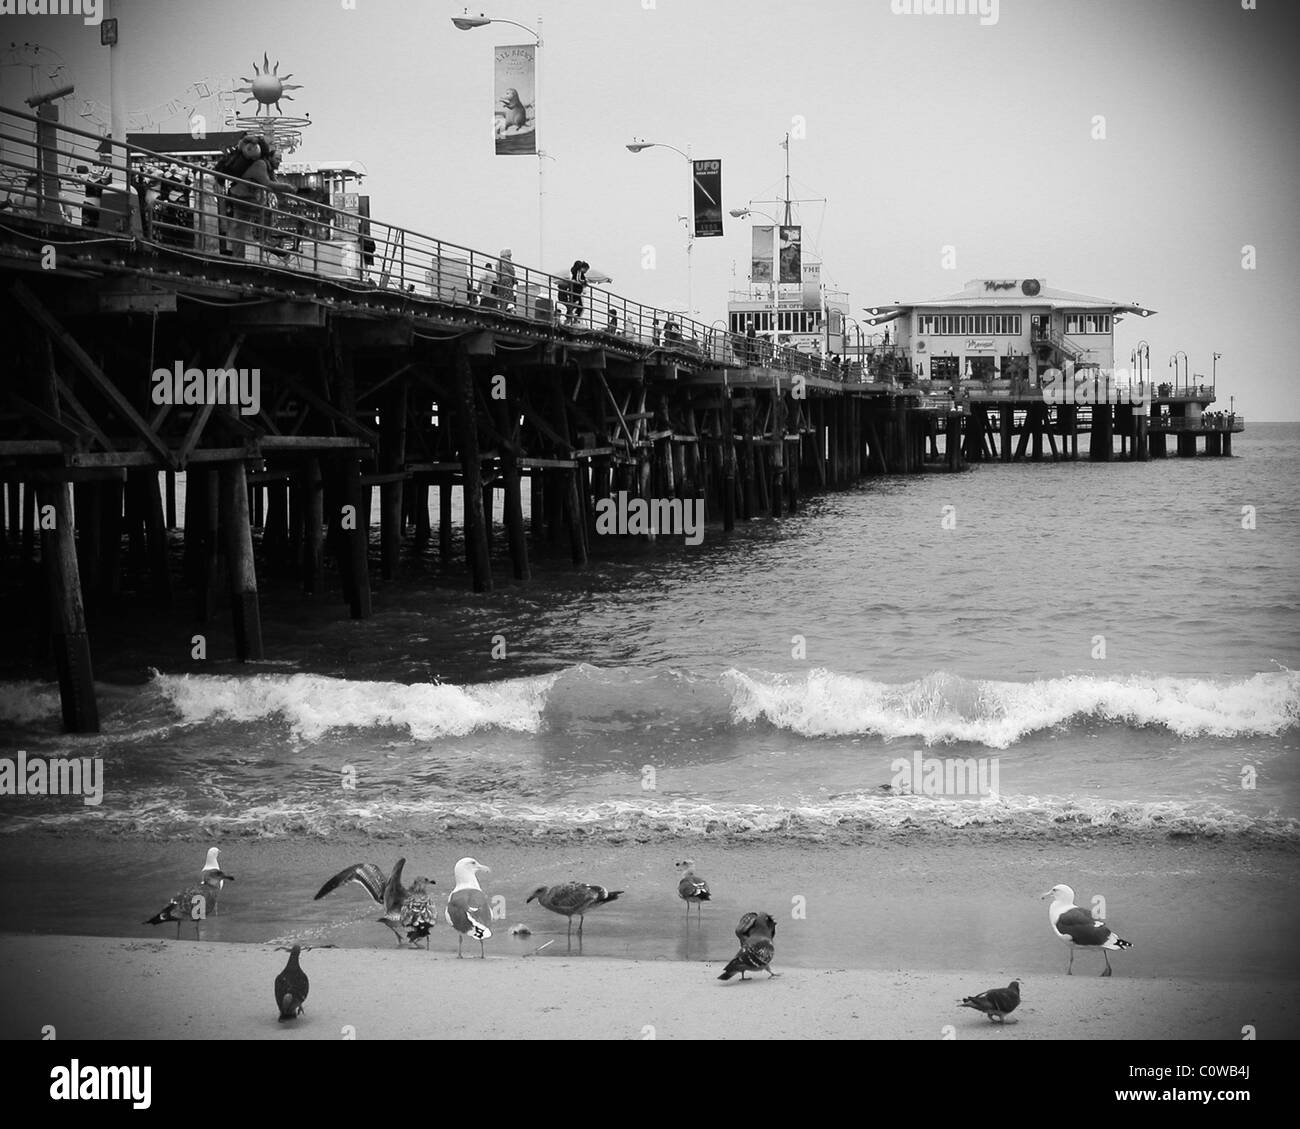 The beach and pier in Santa Monica (Los Angeles), California, USA. Stock Photo